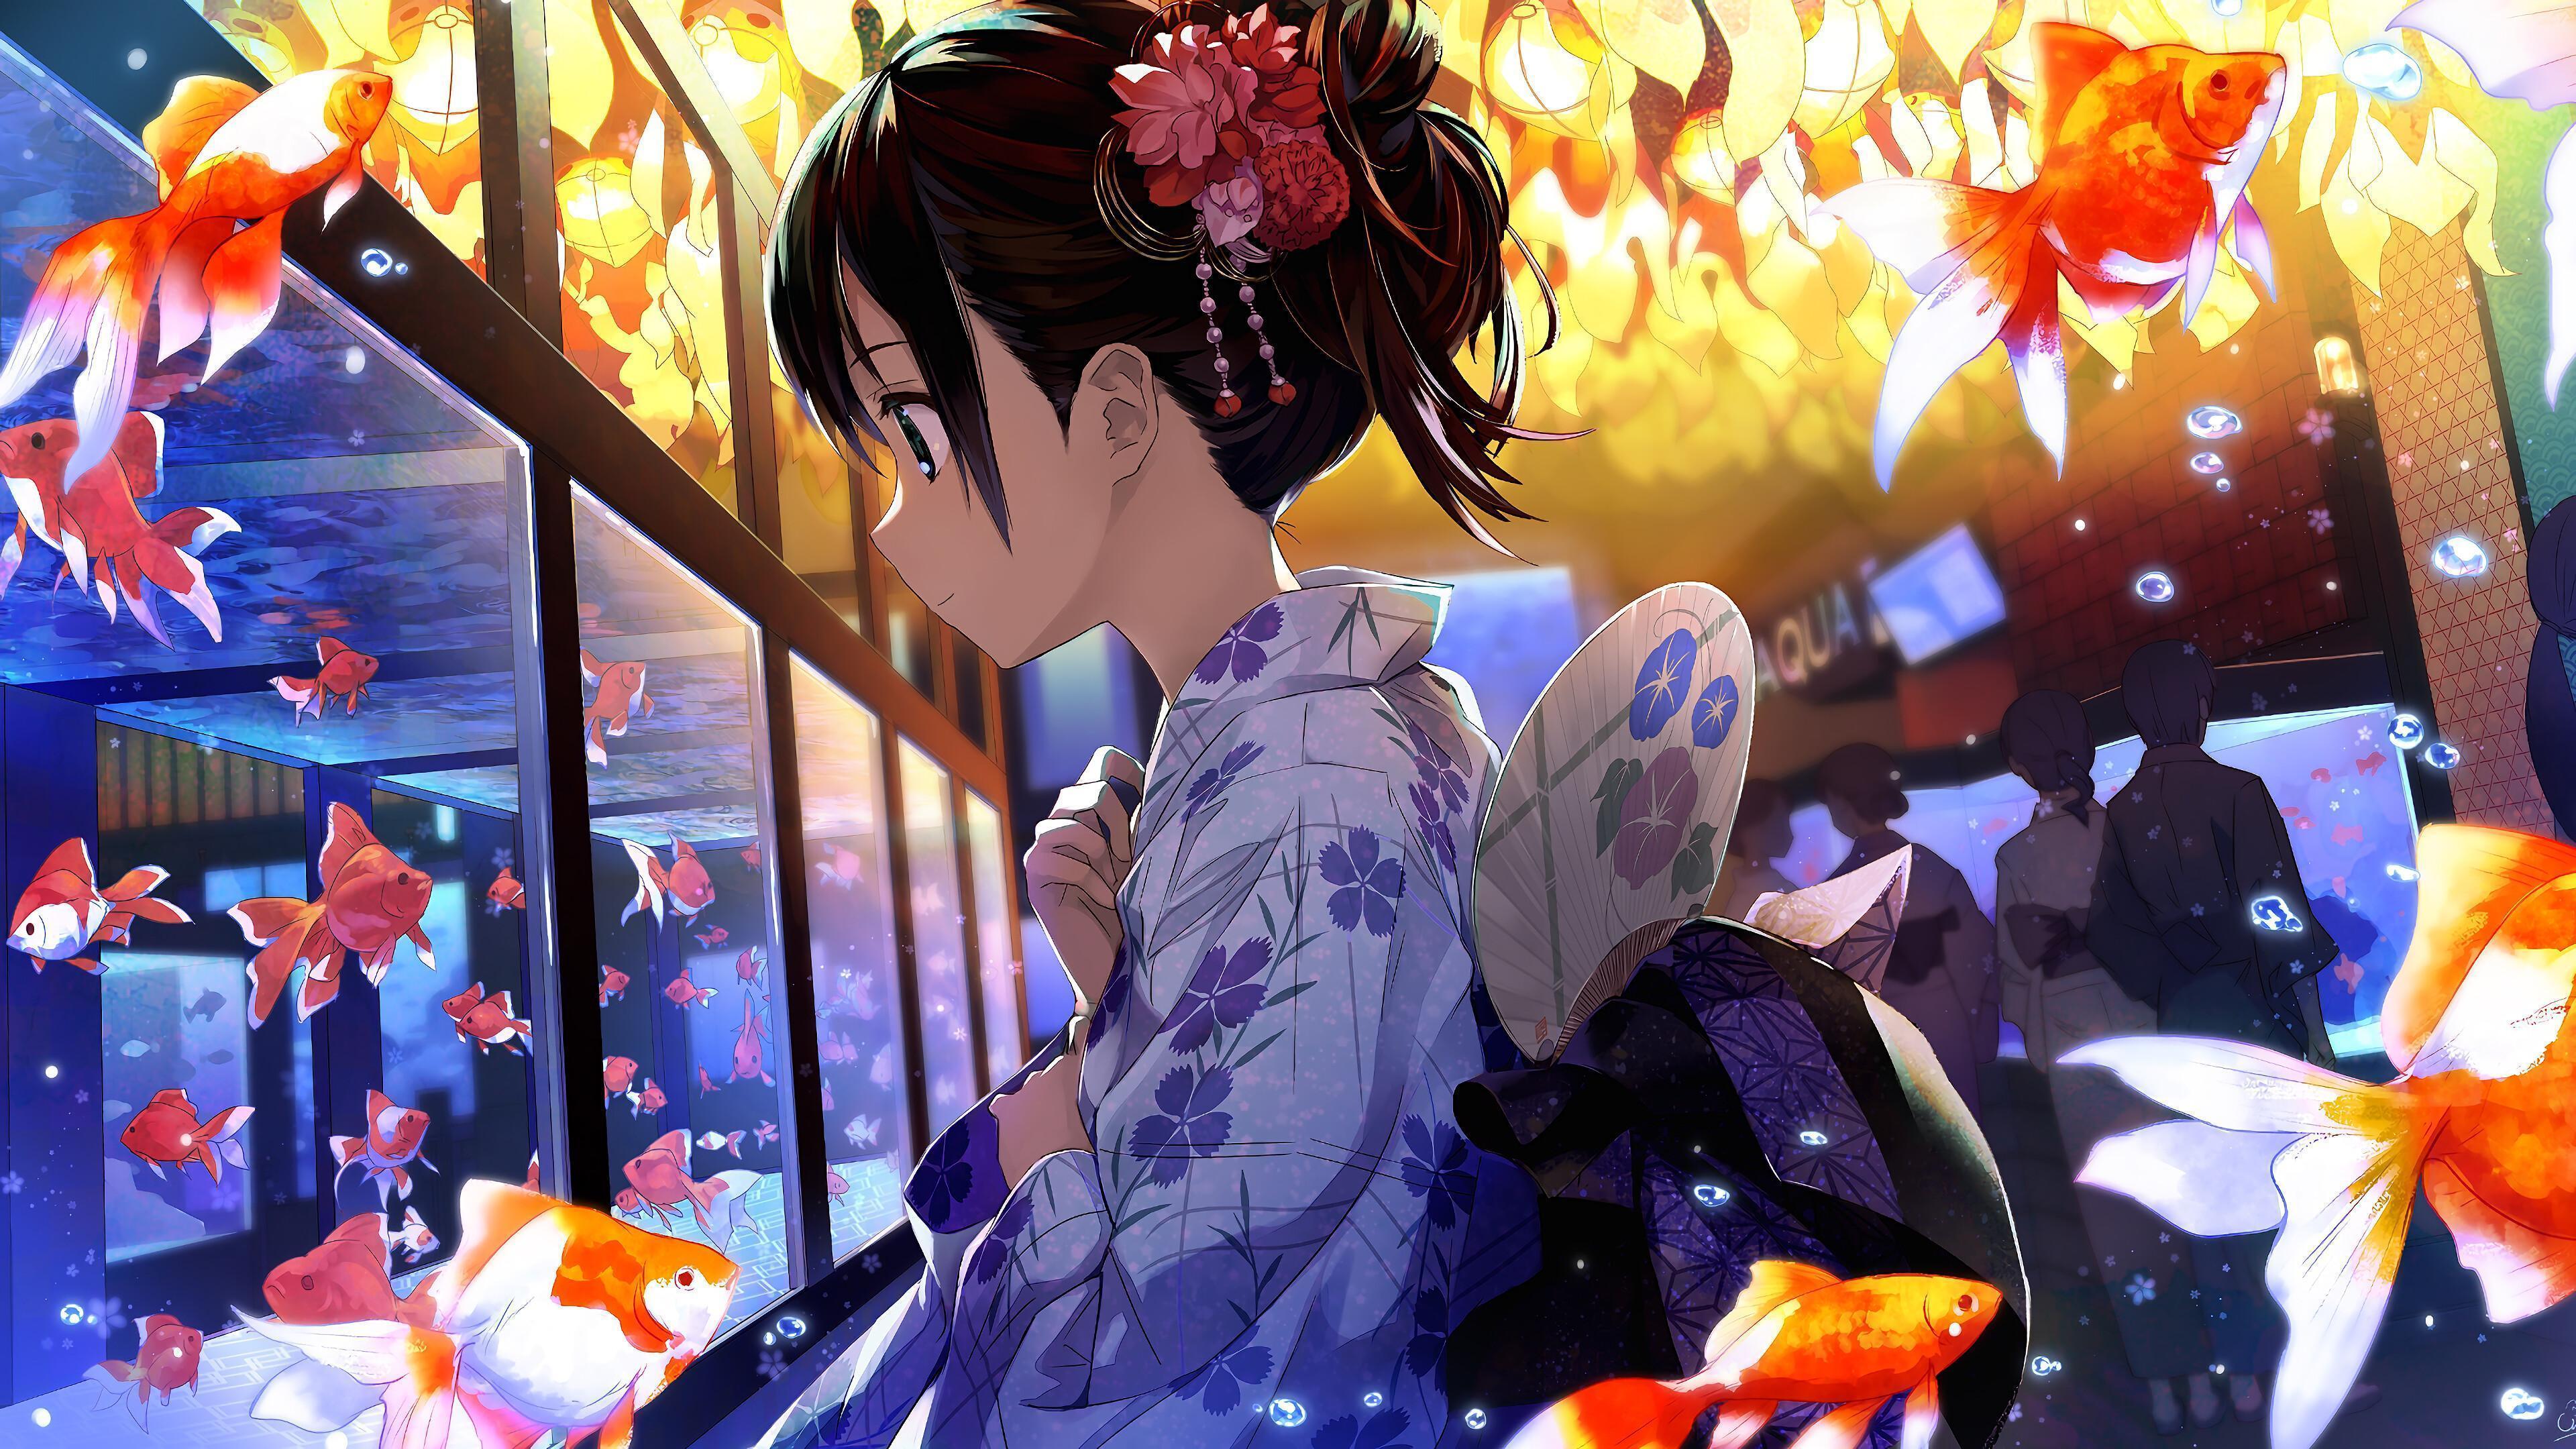 HD wallpaper, Fantasy, Girl, Anime, Kimono, Flying, Gold Fish, 4K